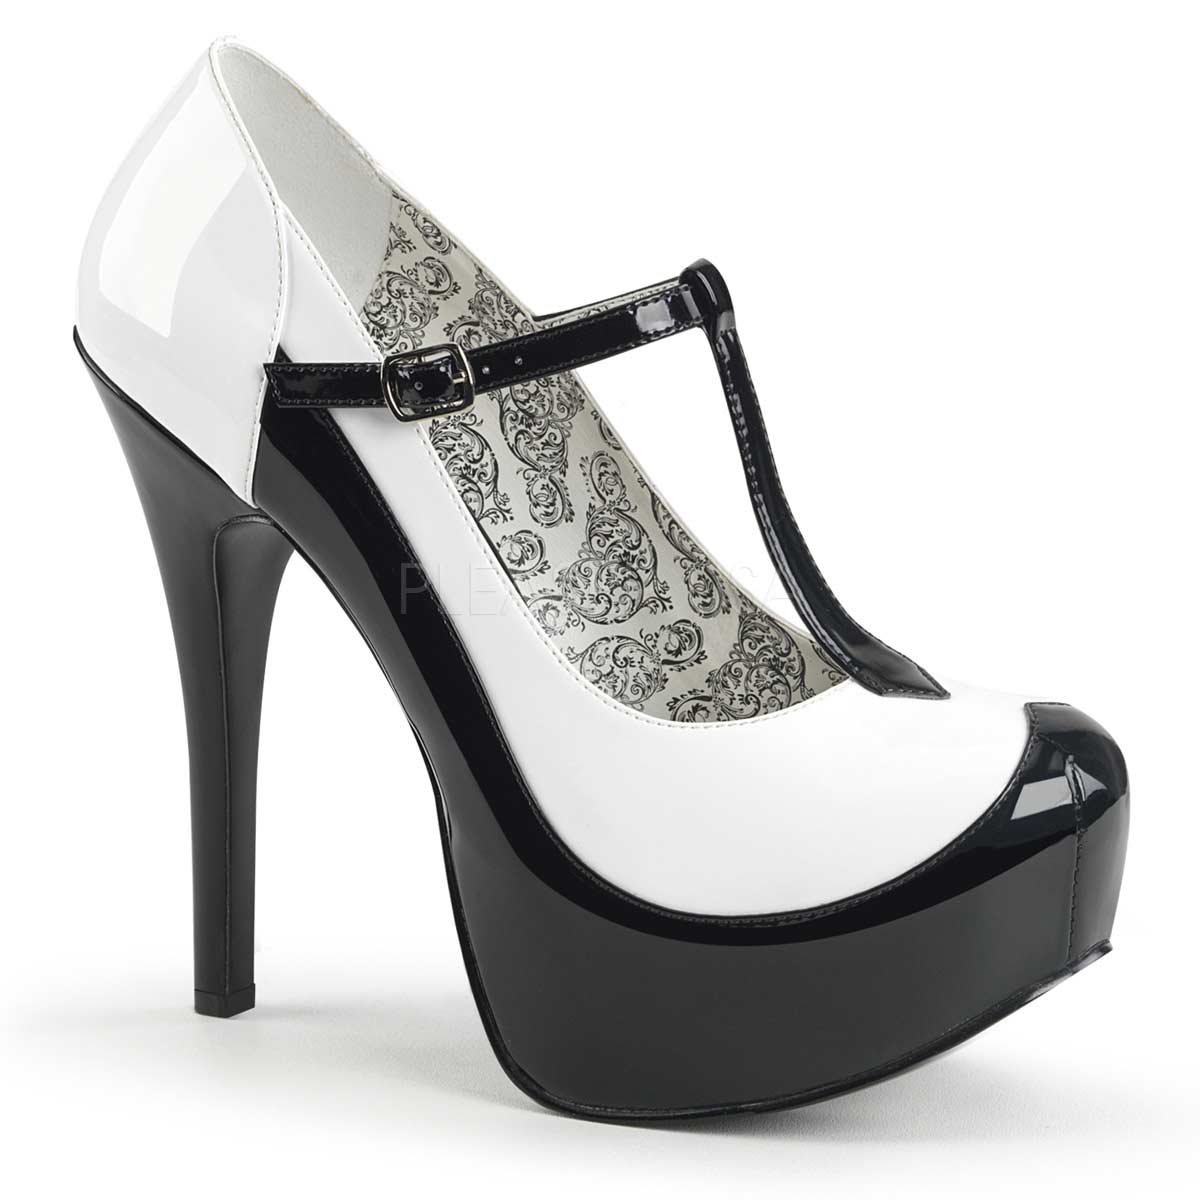 Pleaser Teeze-45W - Black White Pat in Sexy Heels & Platforms - $43.99